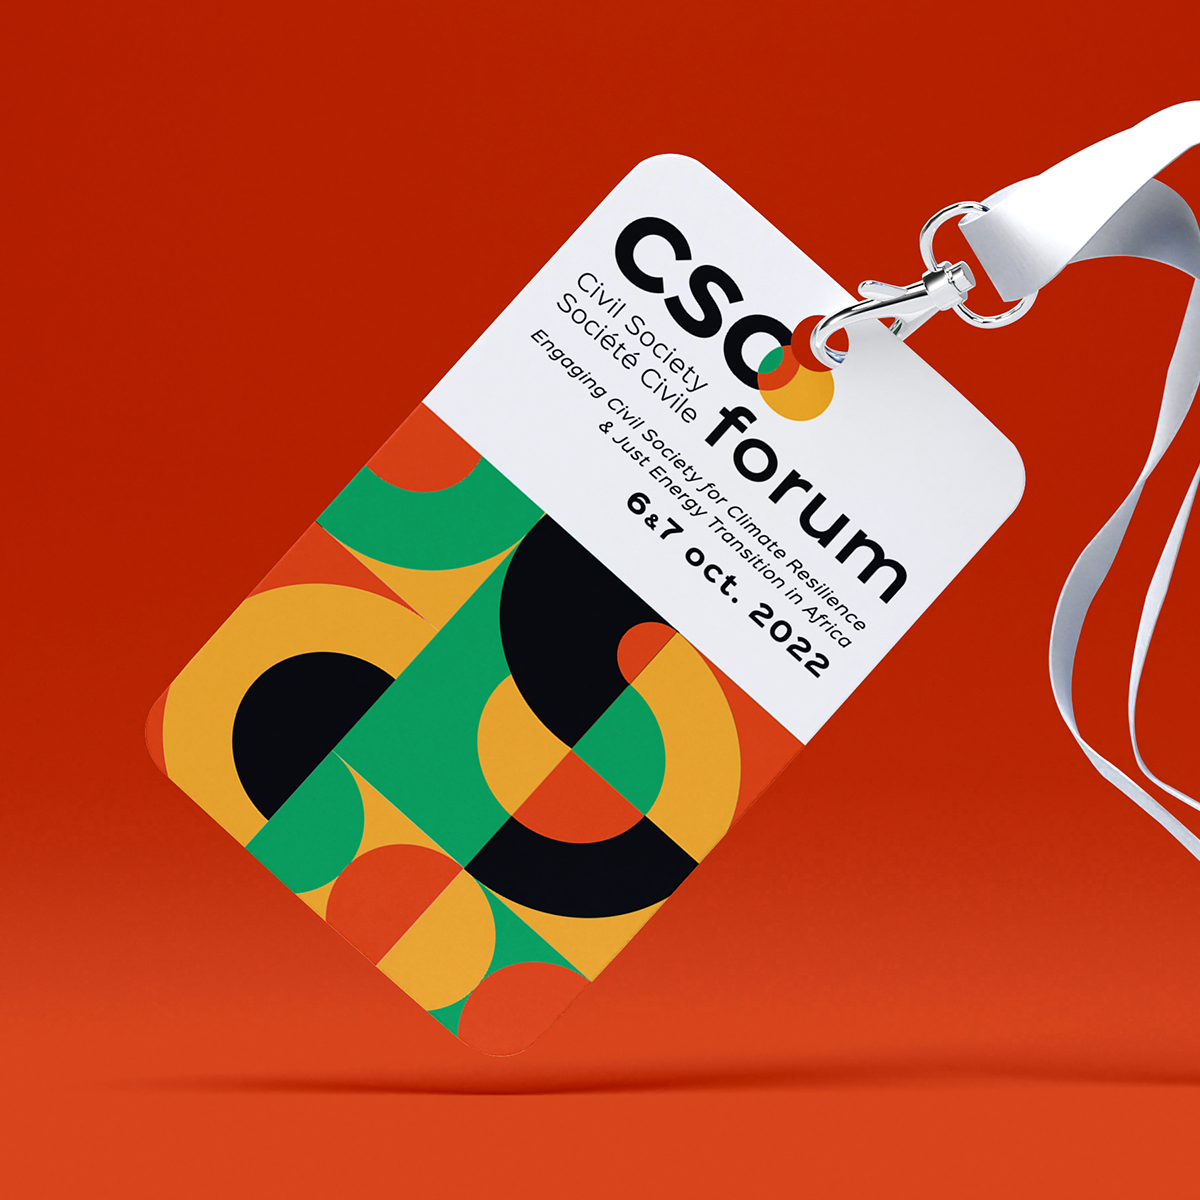 CSO Forum branding design by Sofia Doudine